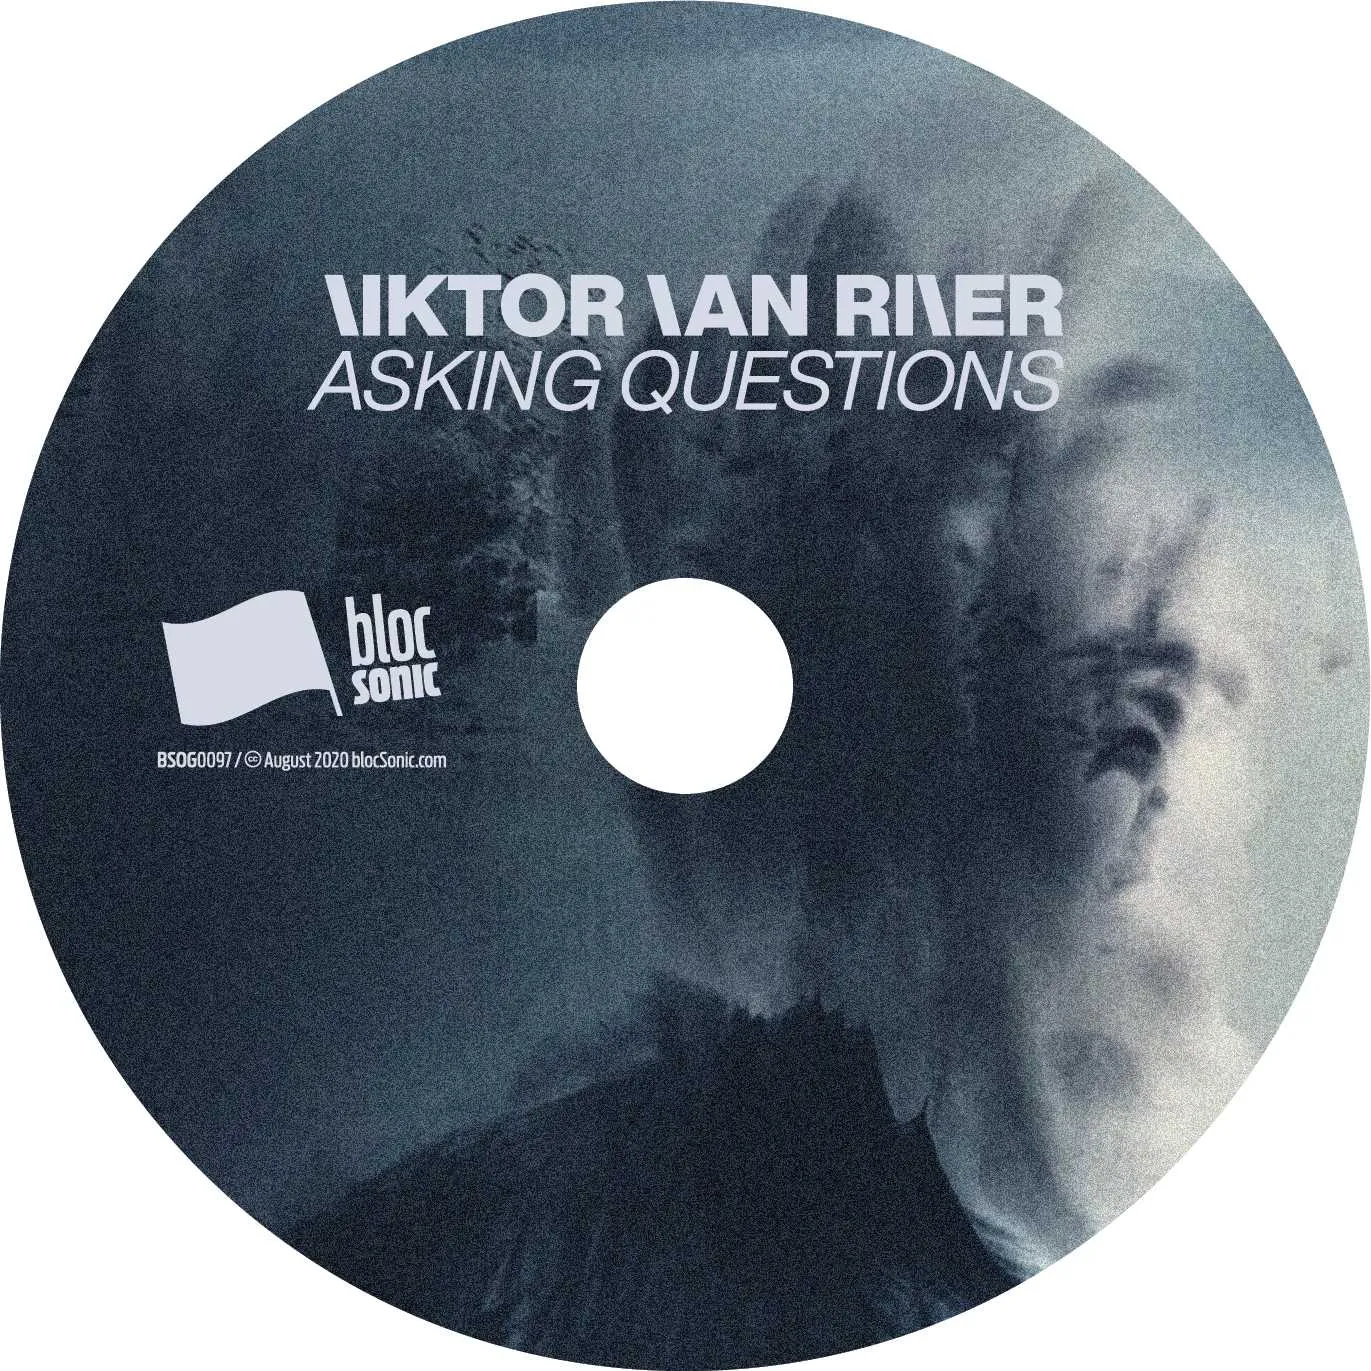 Album disc for “Asking Questions” by Viktor Van River